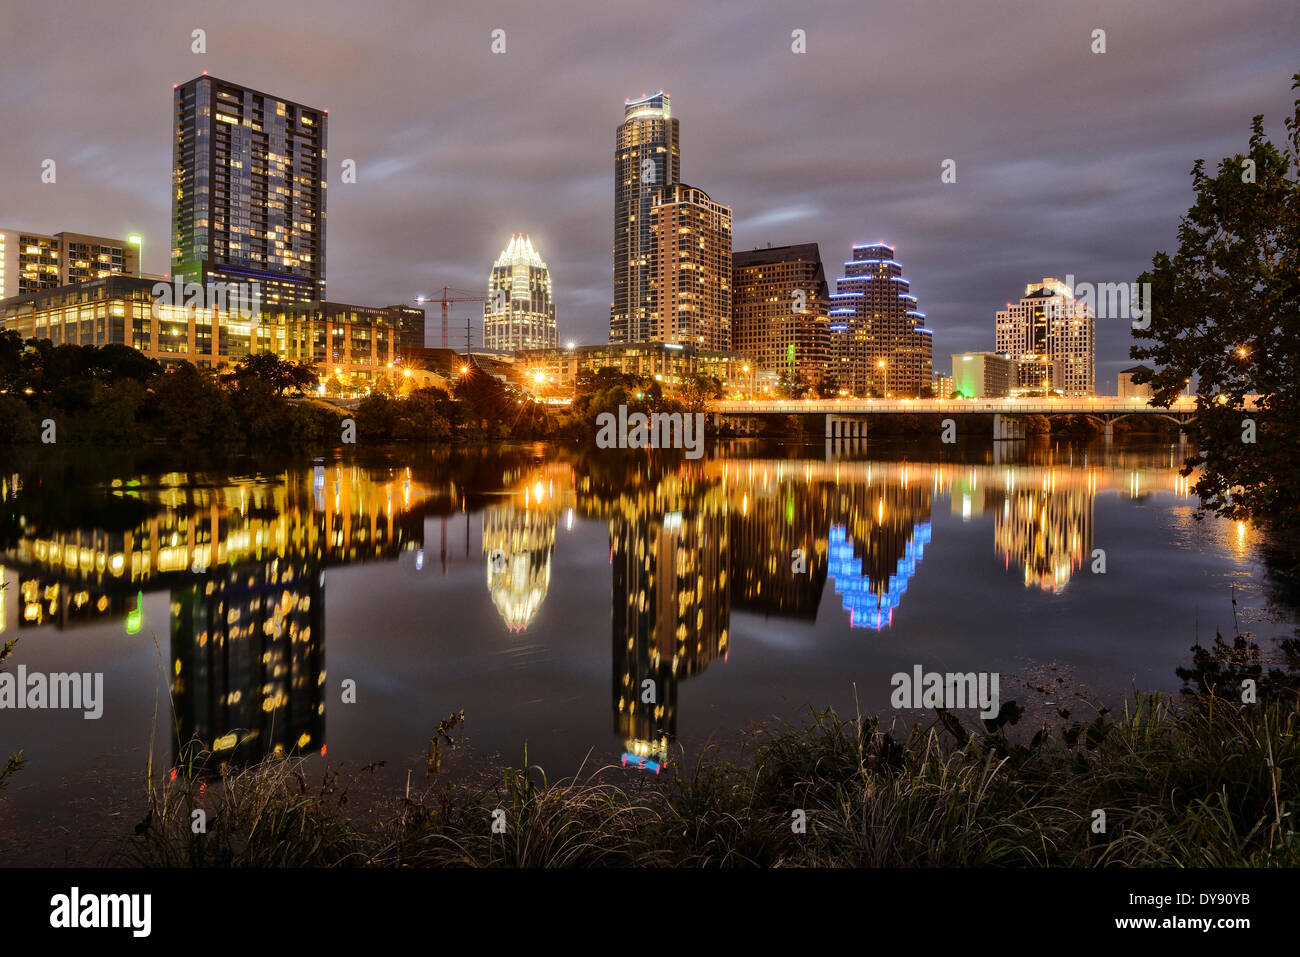 North America Texas USA United States America Austin Skyline river night city reflection lady bird lake Colorado river Stock Photo